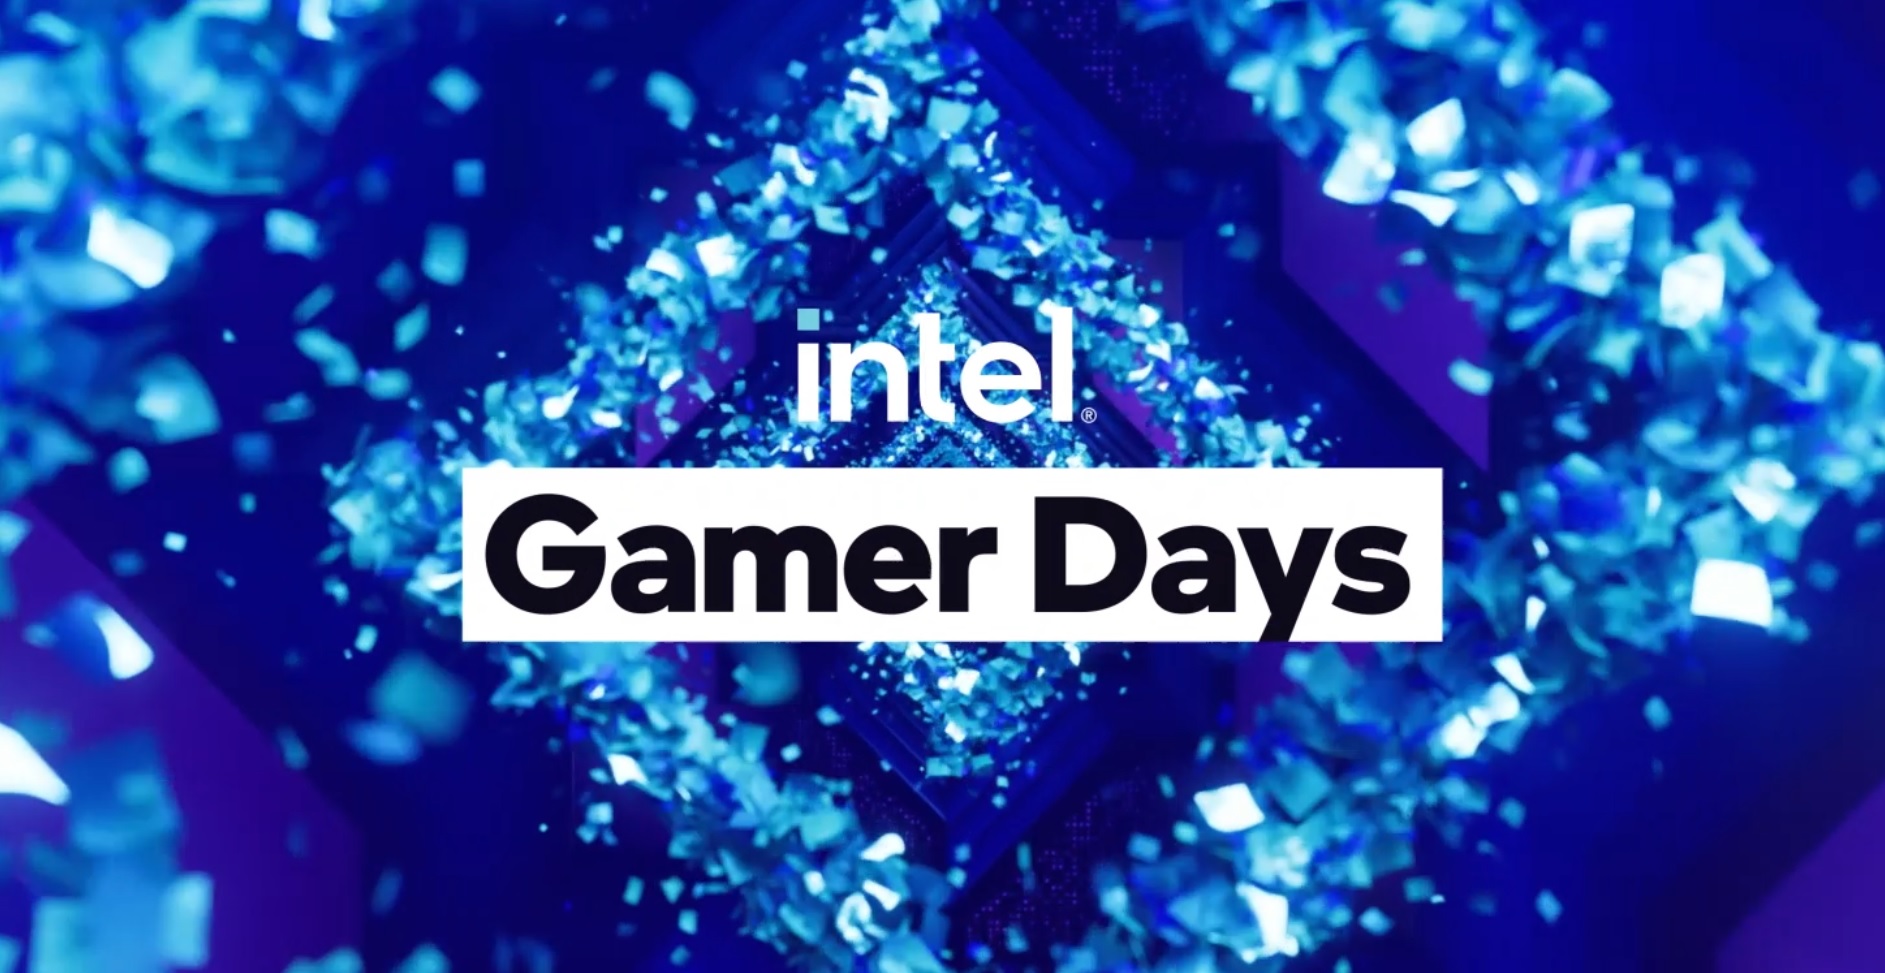 Gli Intel Gamer Days iniziano oggi